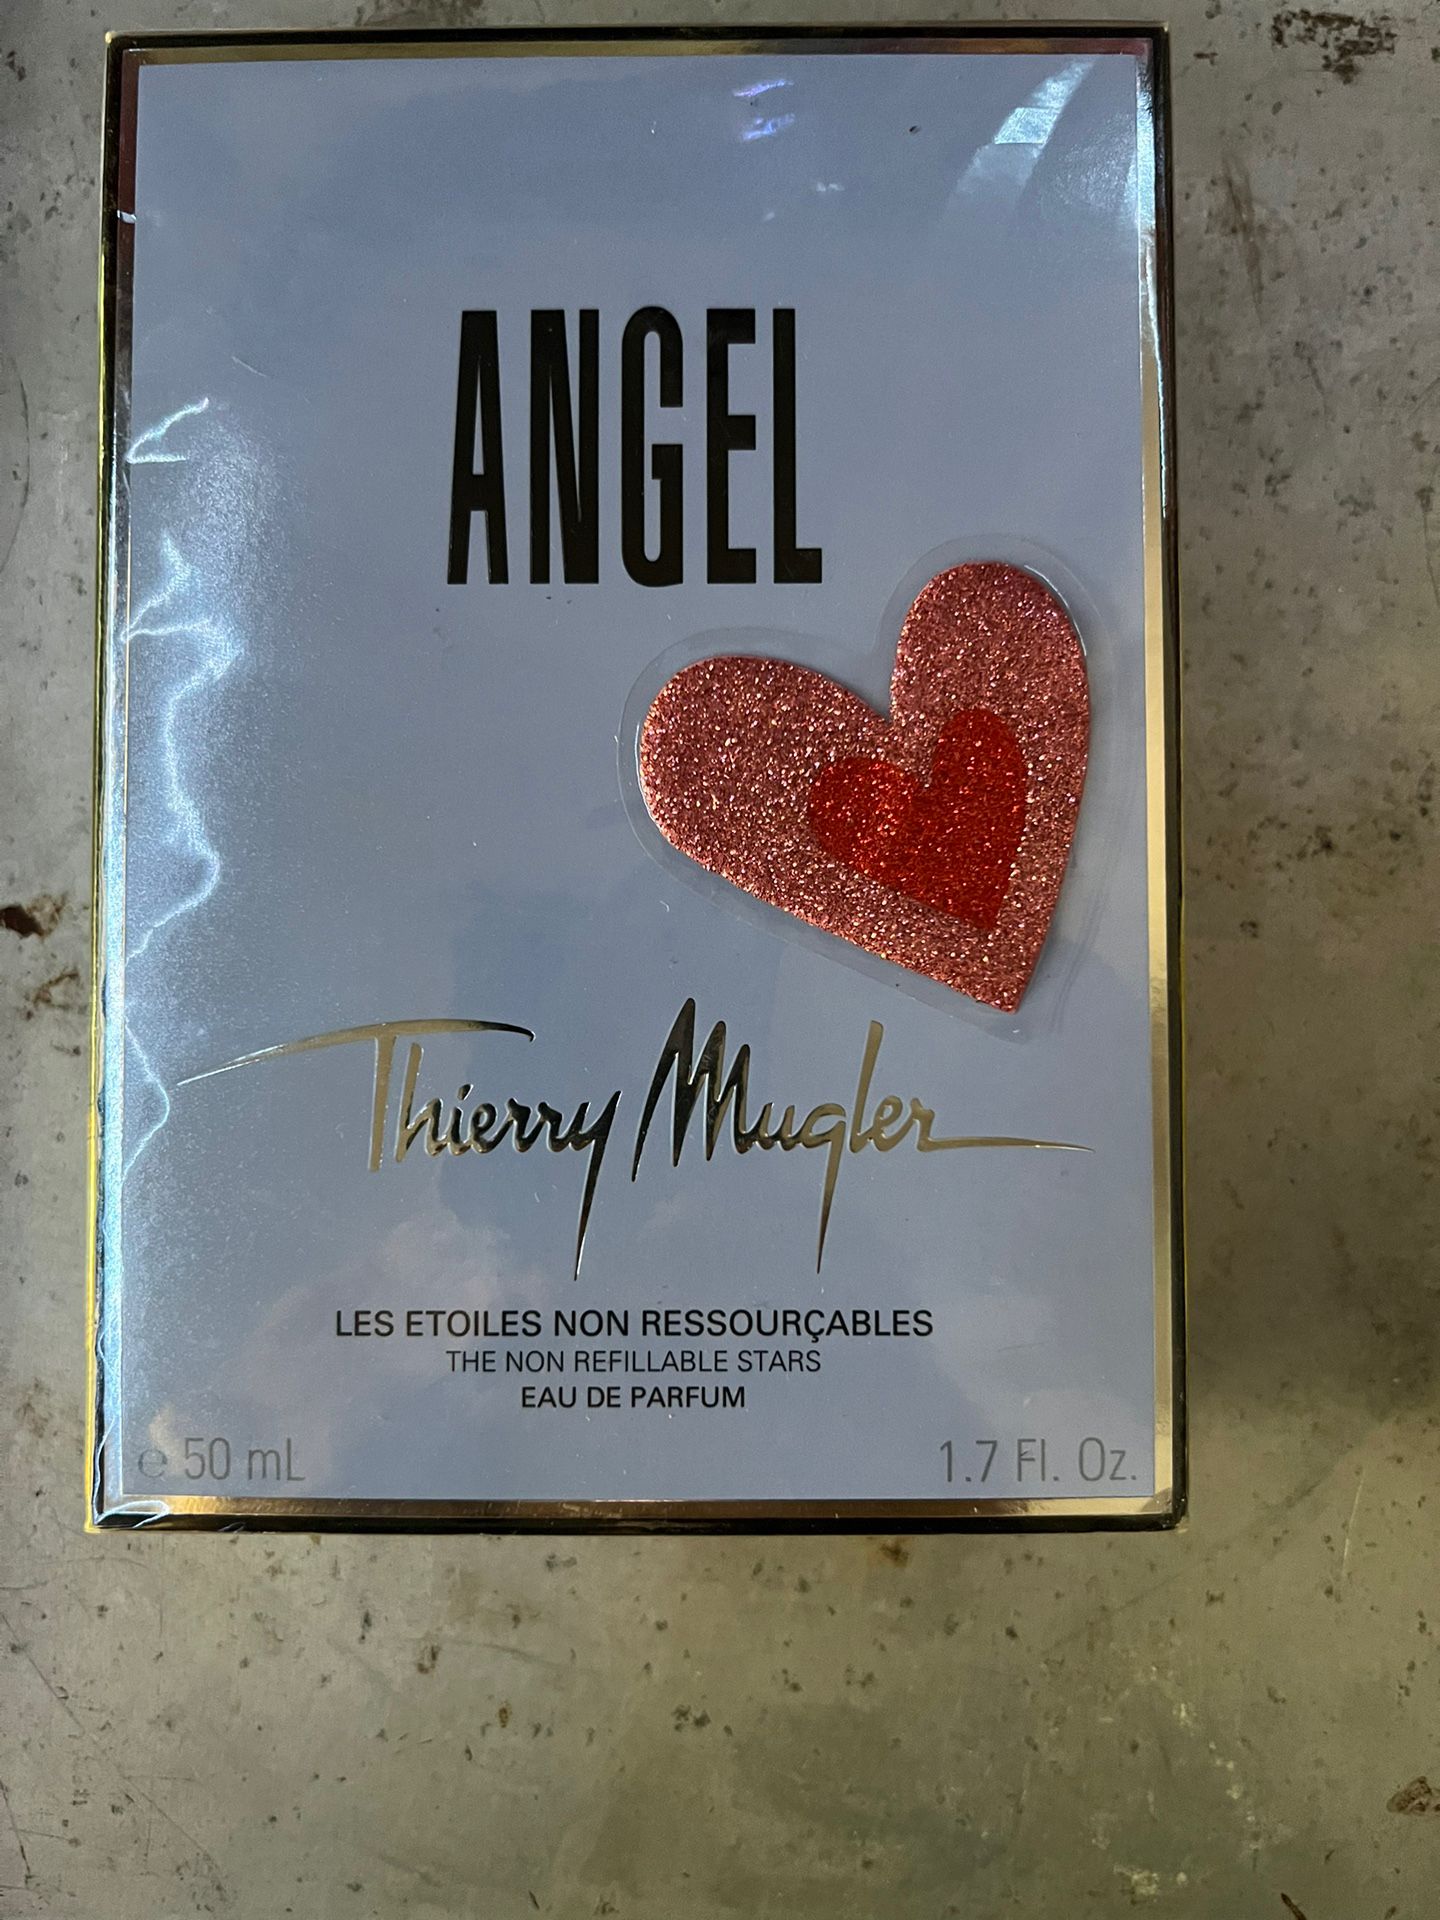 Angel Thierry Mugler